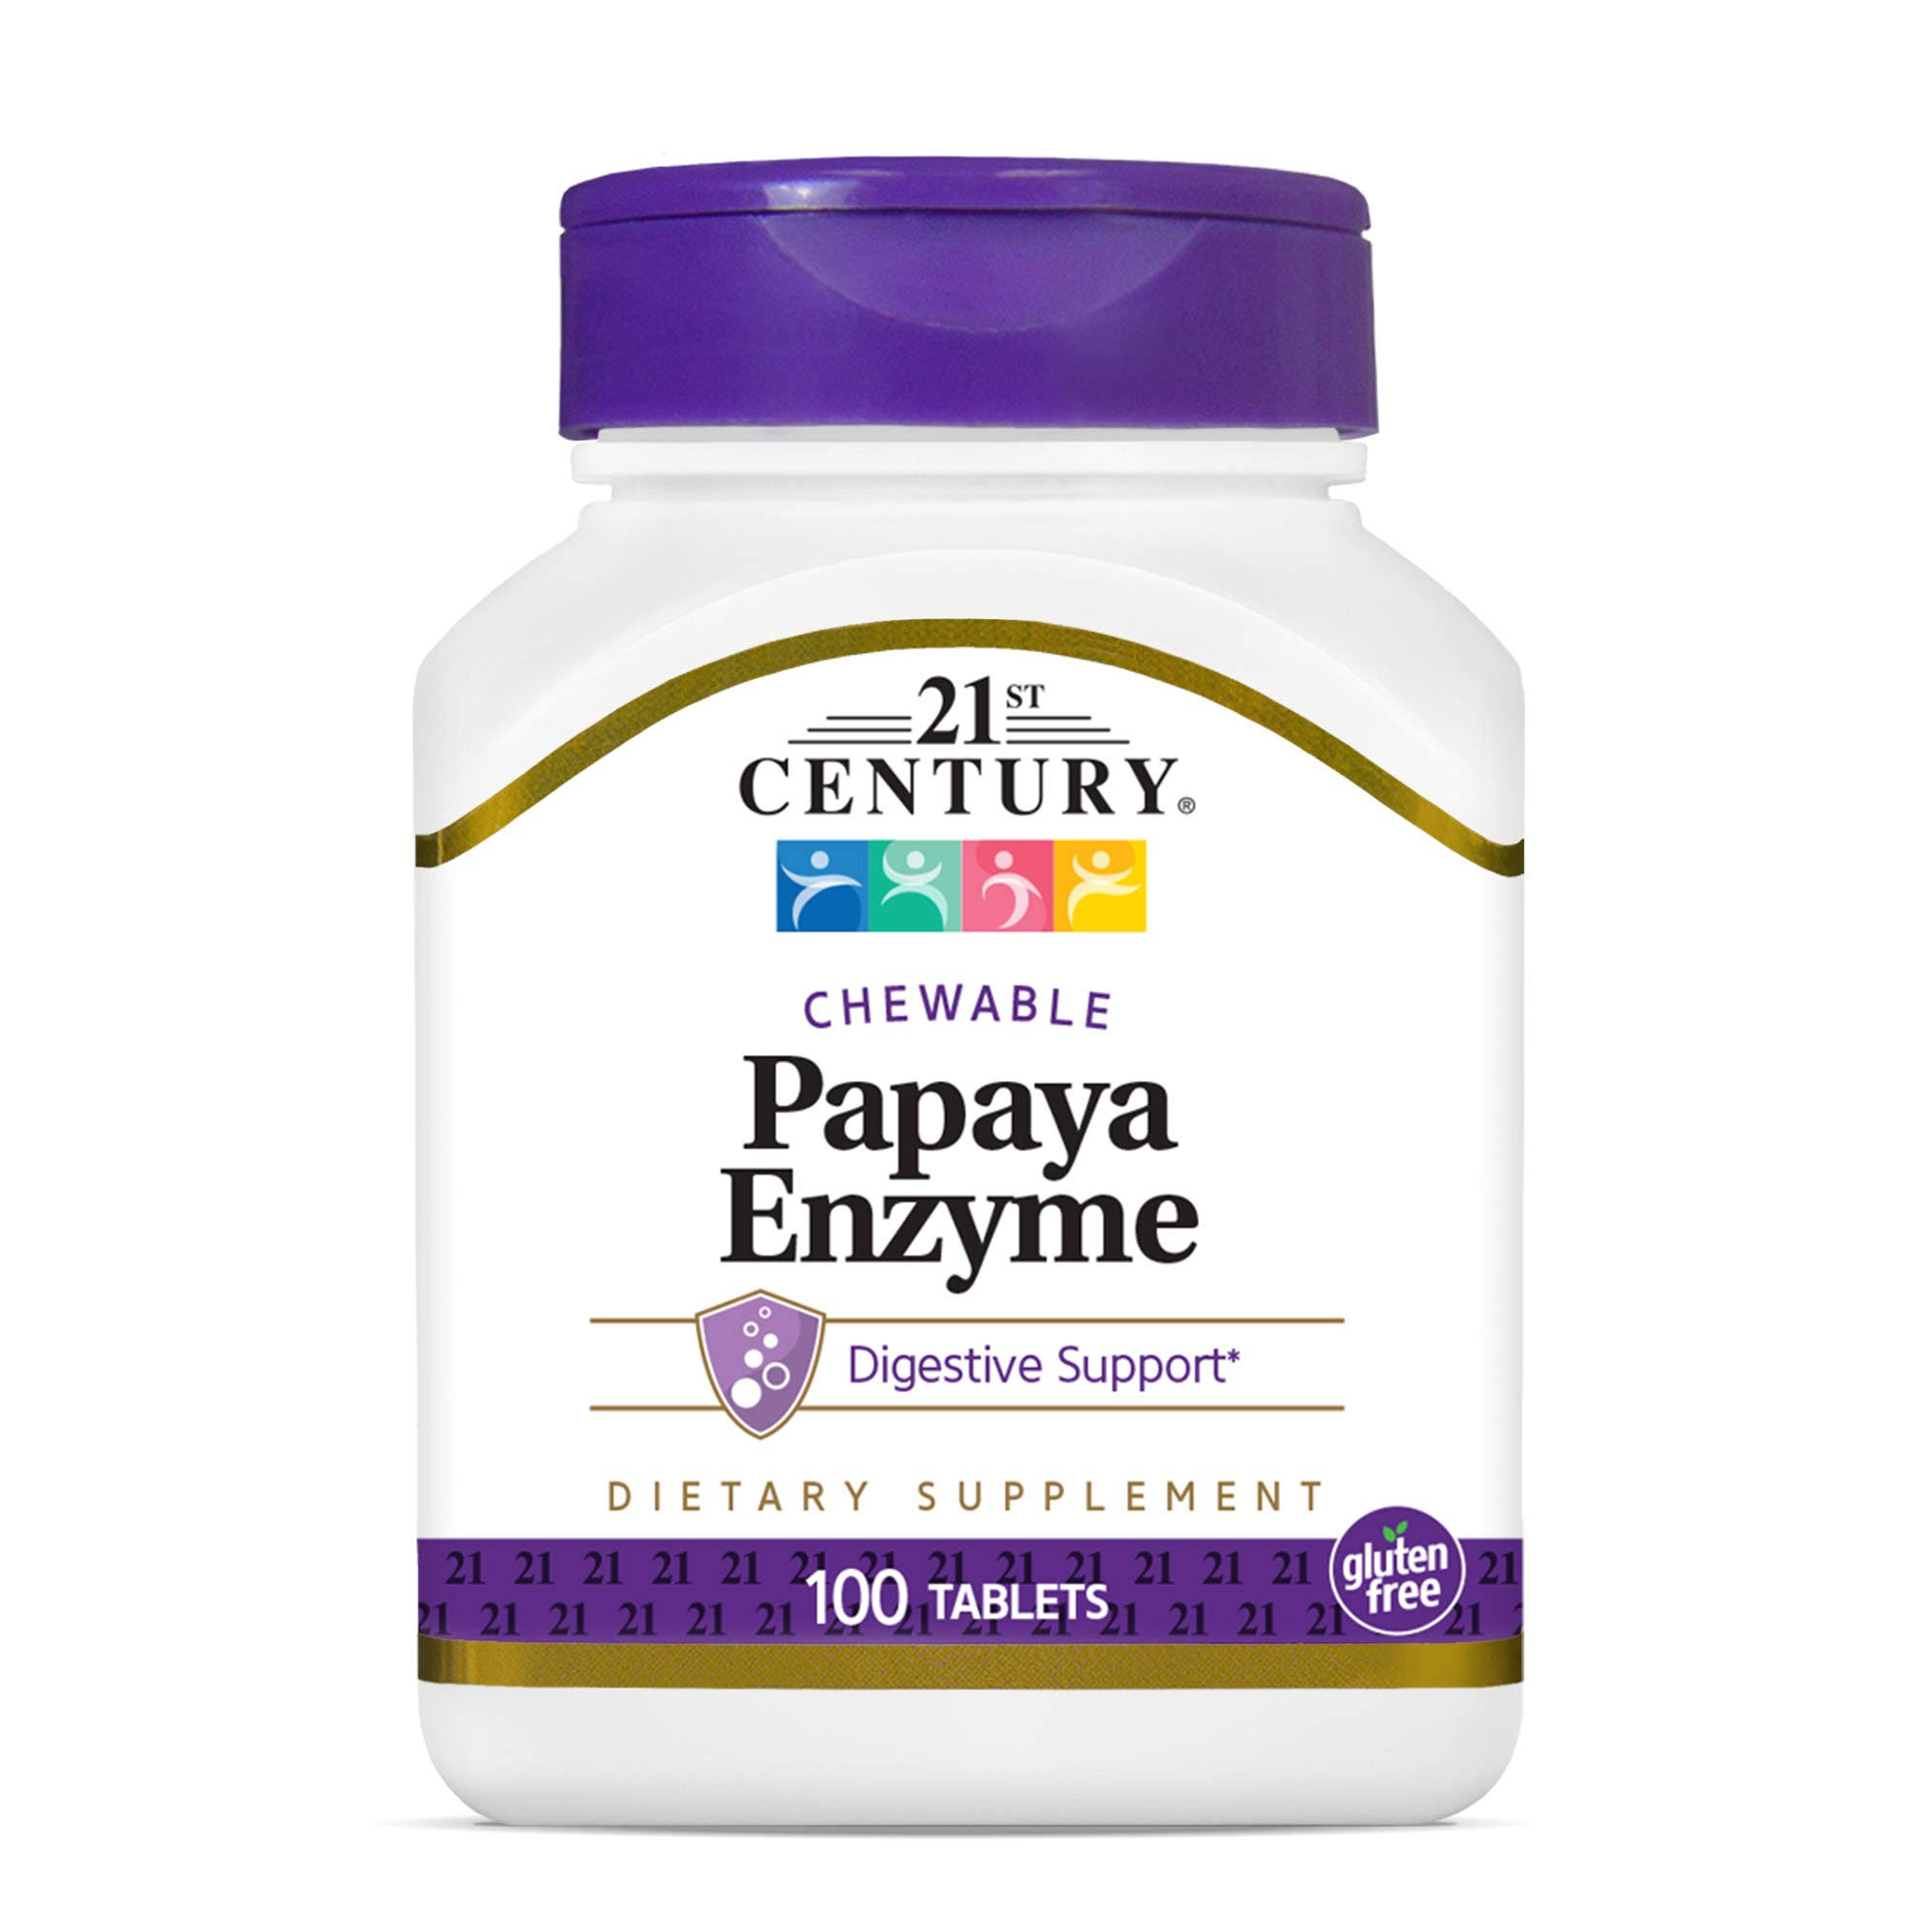 21st Century Health Care Papaya Enzyme